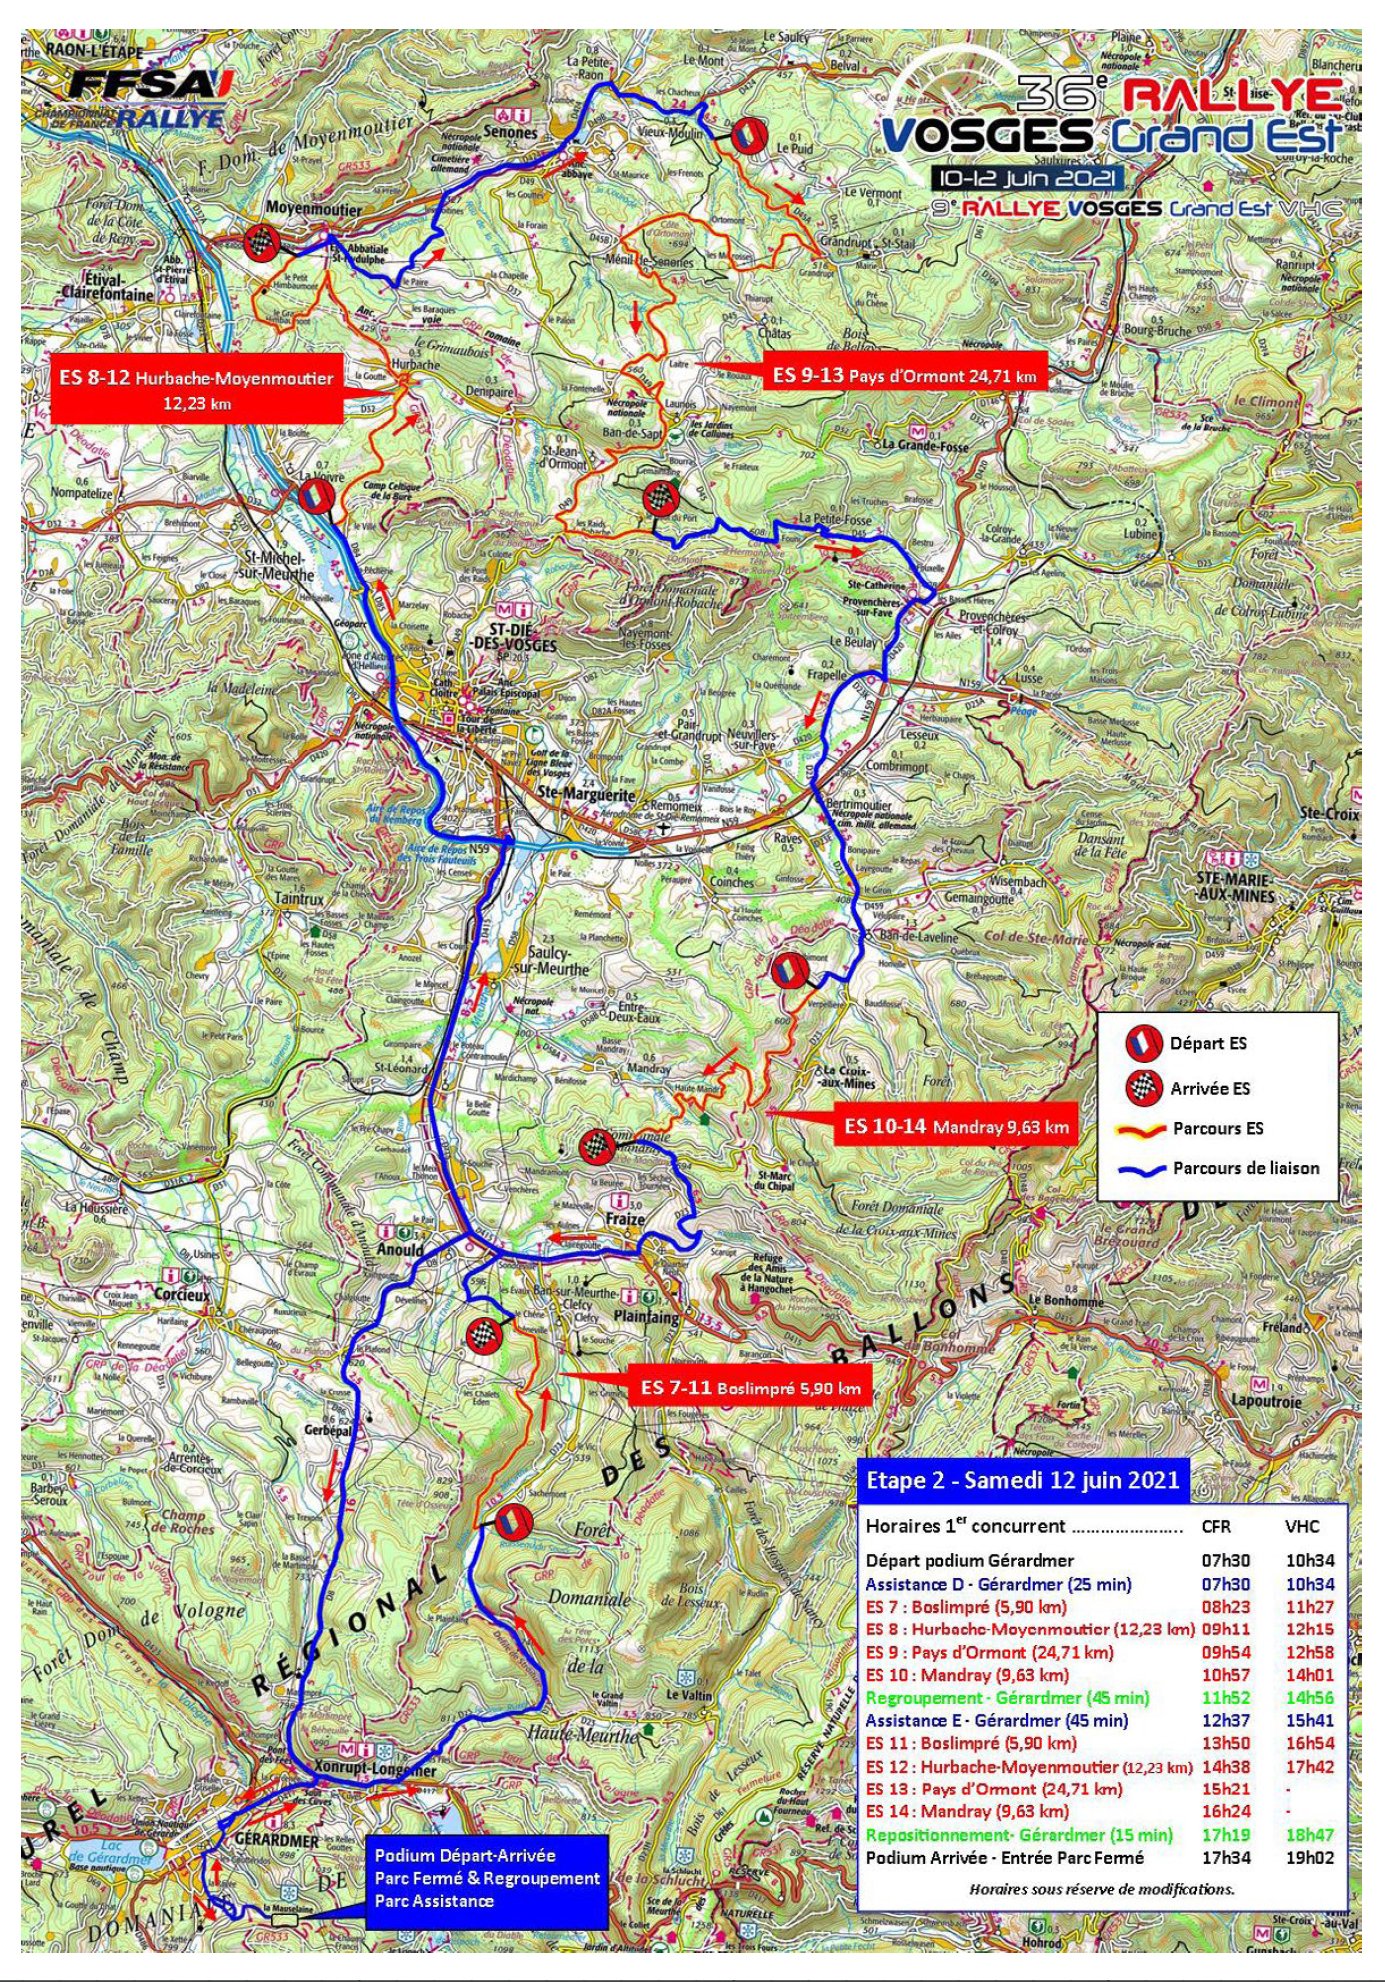 Rallye Vosges grand est 2021 etape2